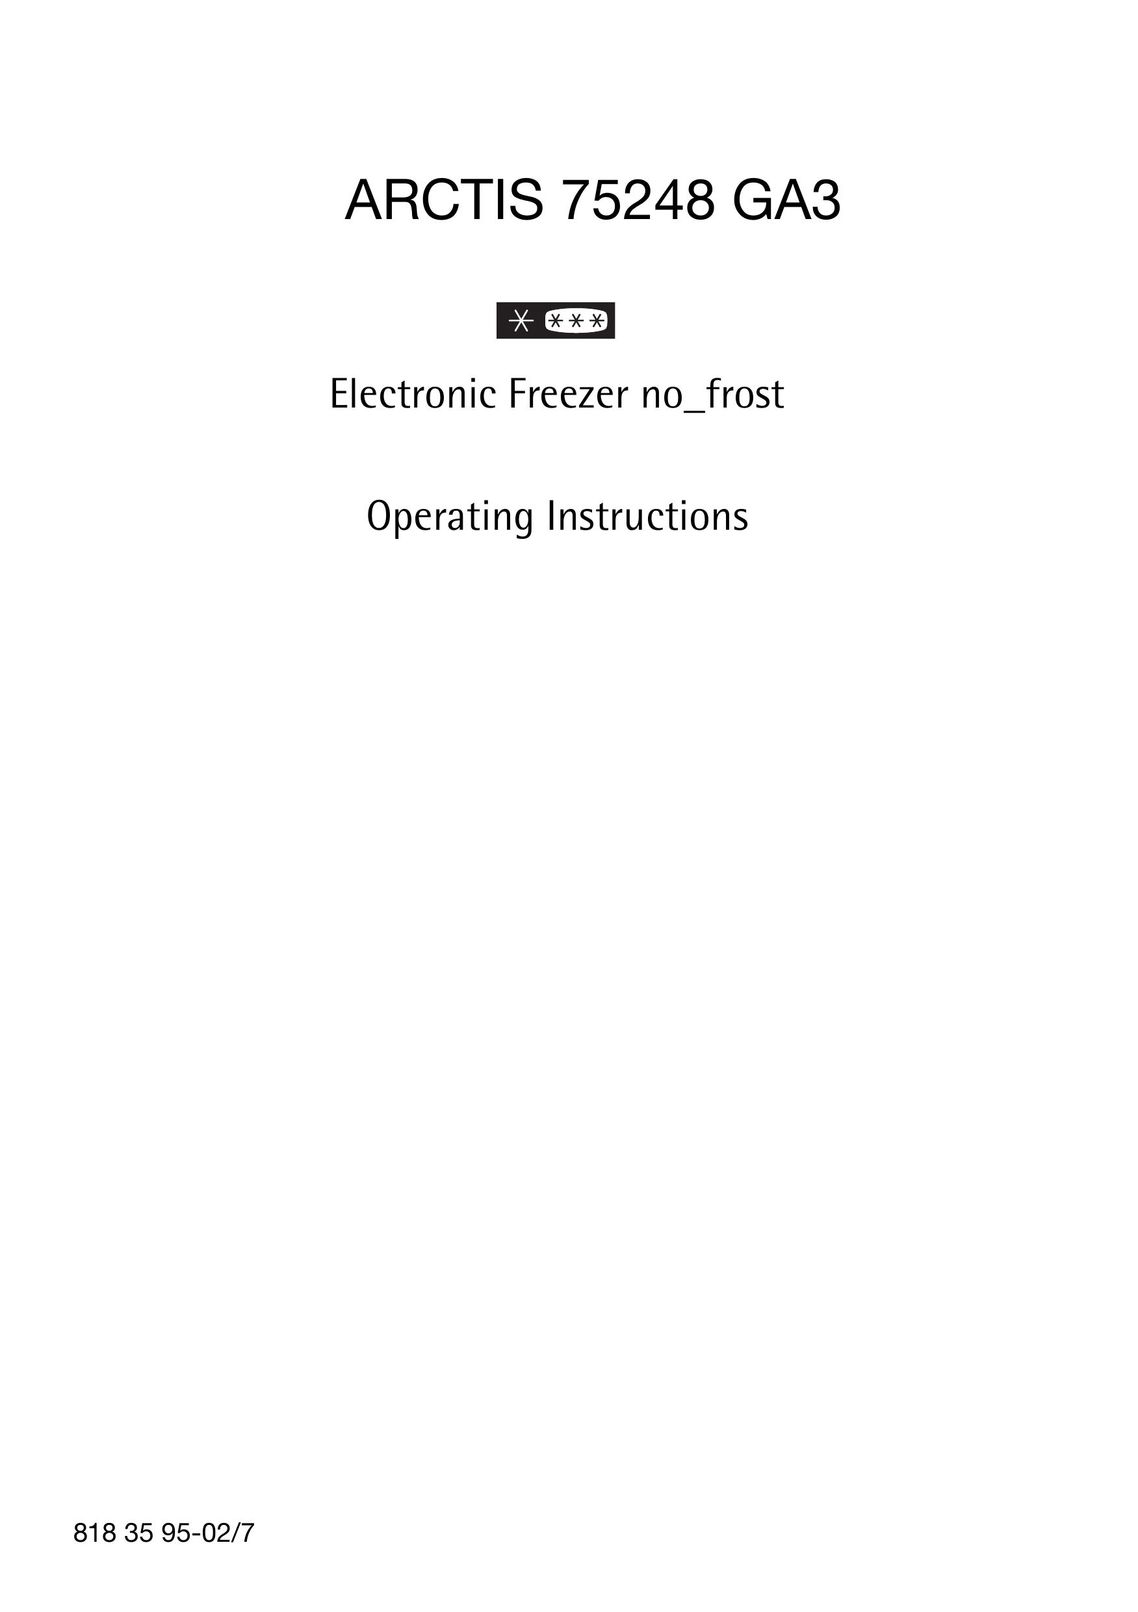 AEG 75248 GA3 Freezer User Manual